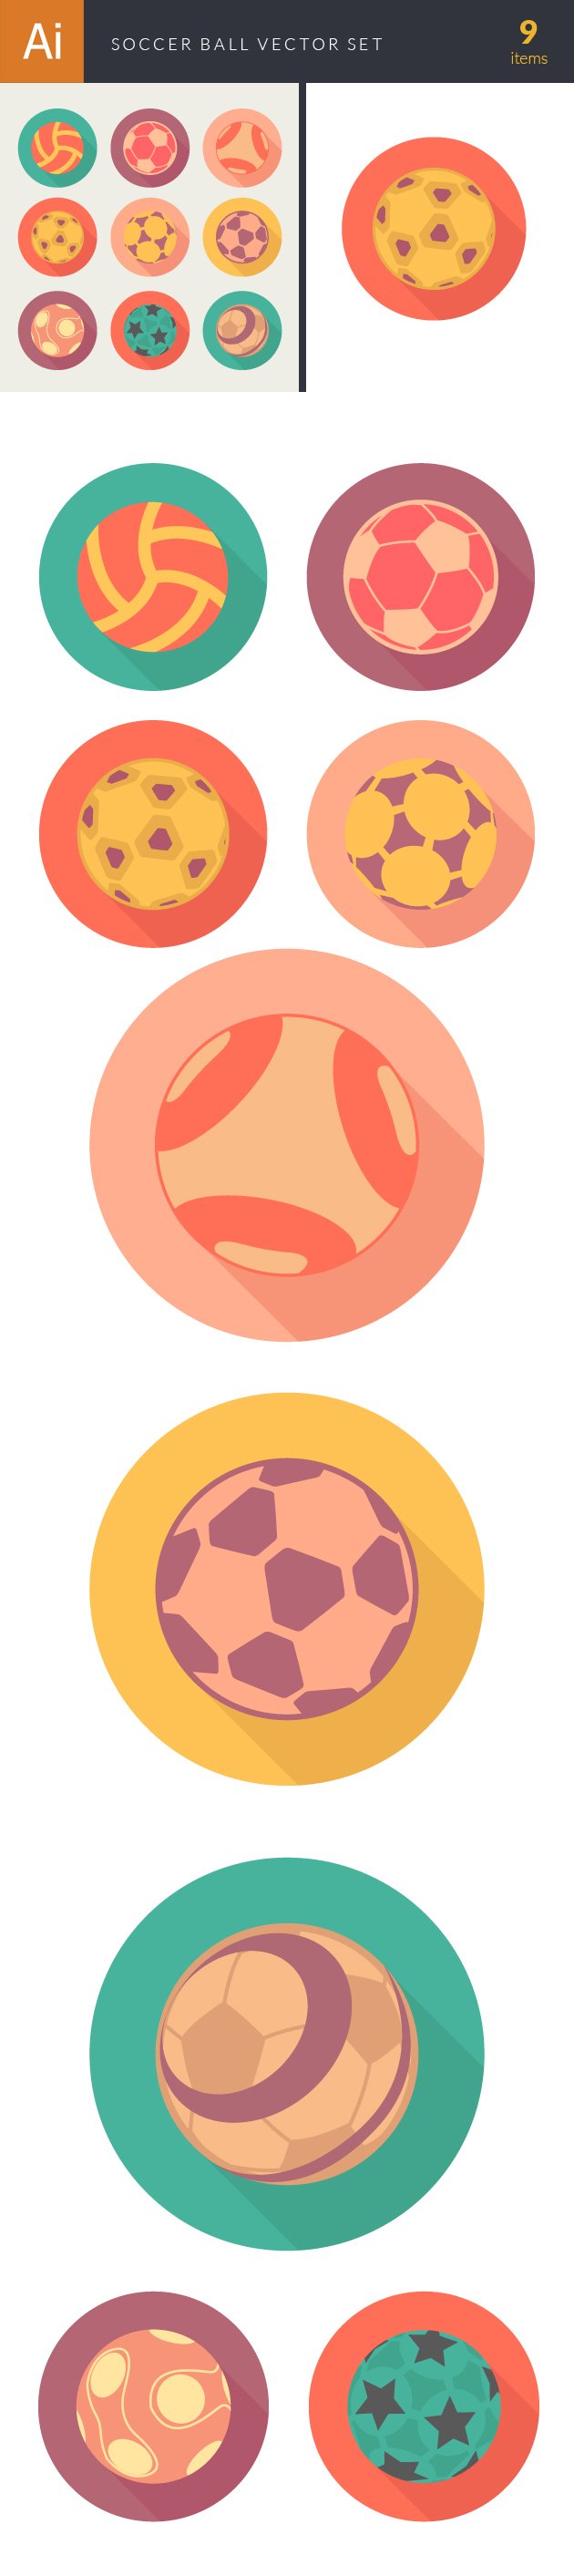 Soccer Ball Vector Set 1 2